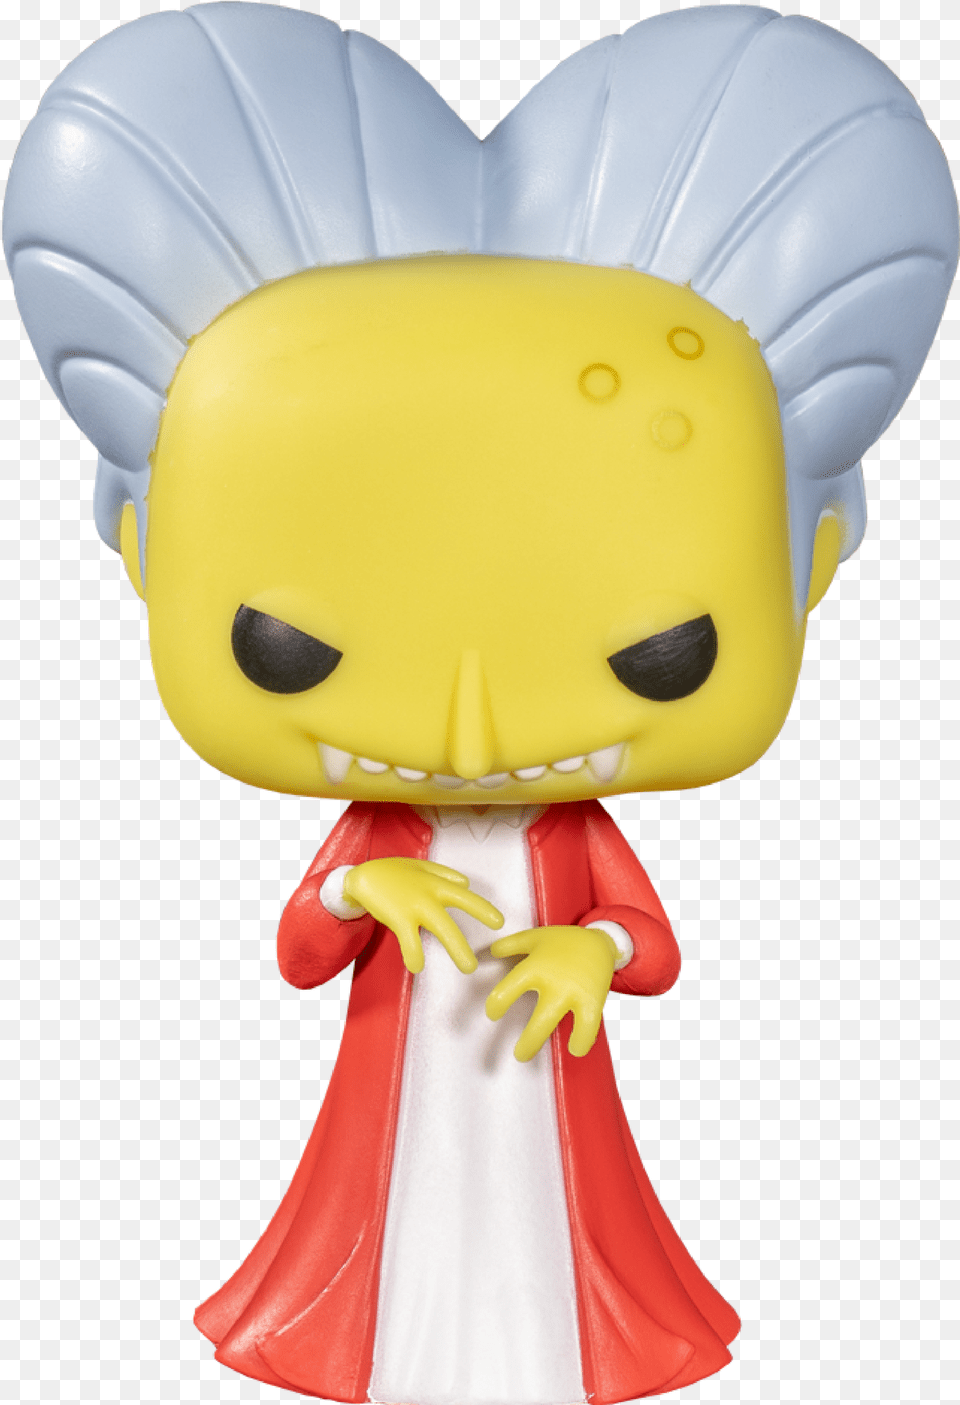 Vampire Mr Burns Funko Pop, Toy, Figurine Png Image